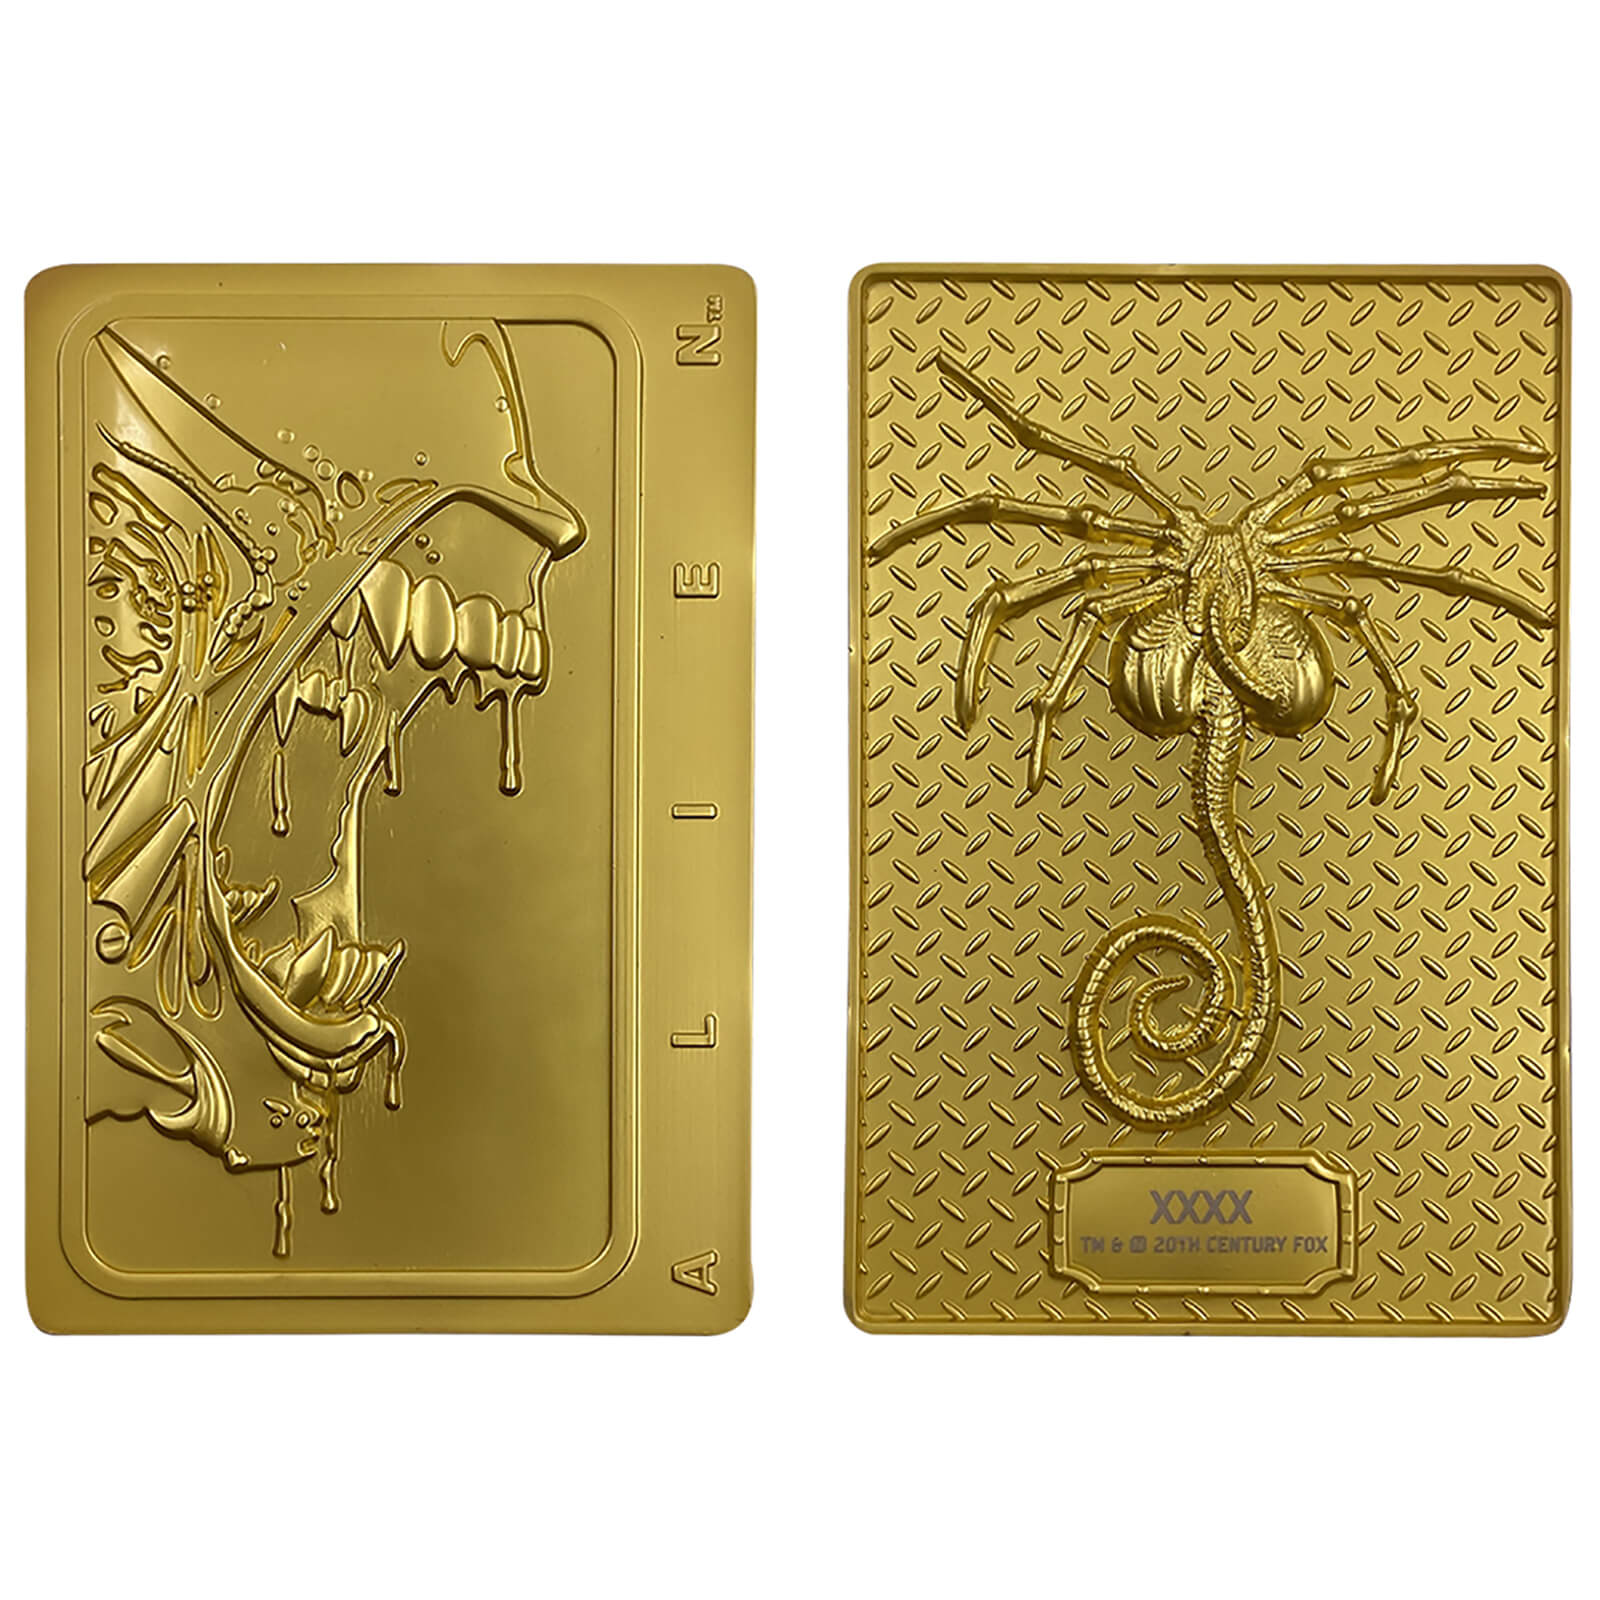 Alien 24k Gold Plated Xenomorph Limited Edition Ingot - Zavvi Exclusive